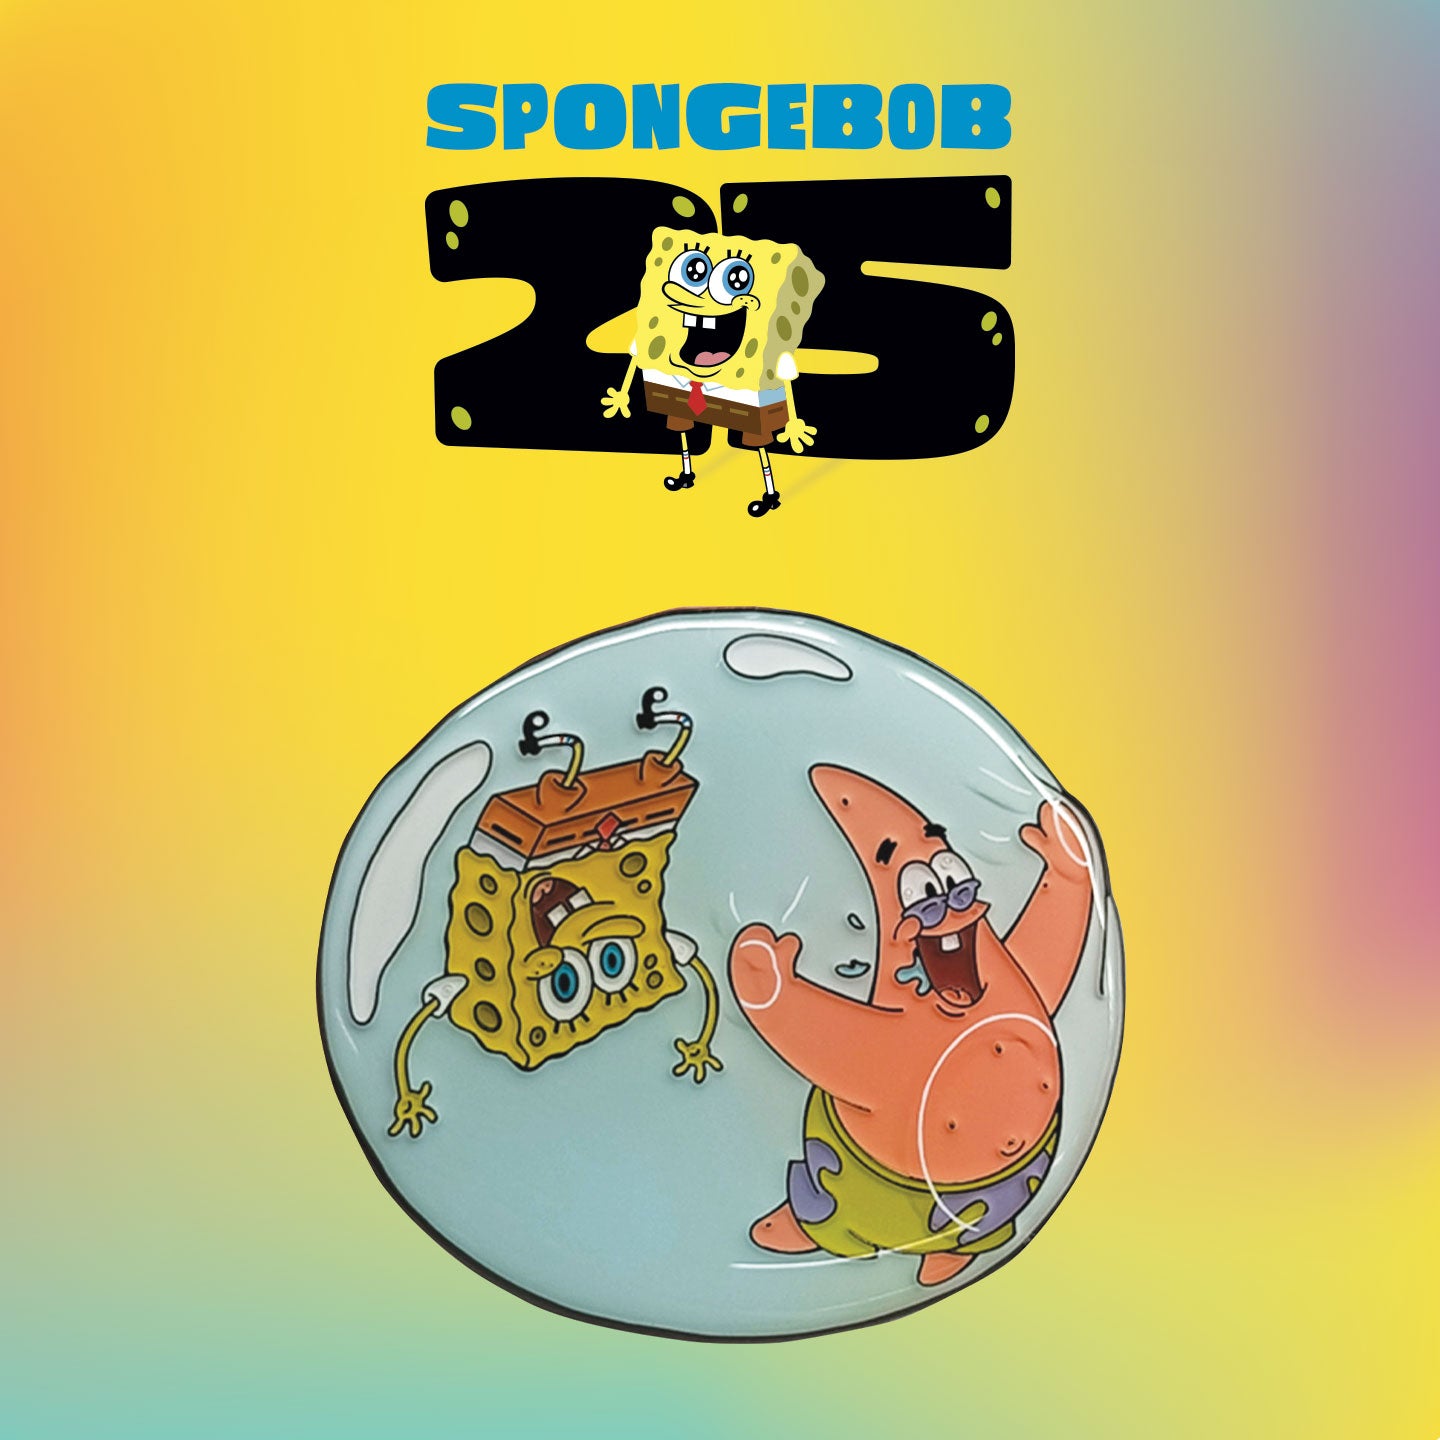 SpongeBob SquarePants limited edition enamel pin badge from Fanattik